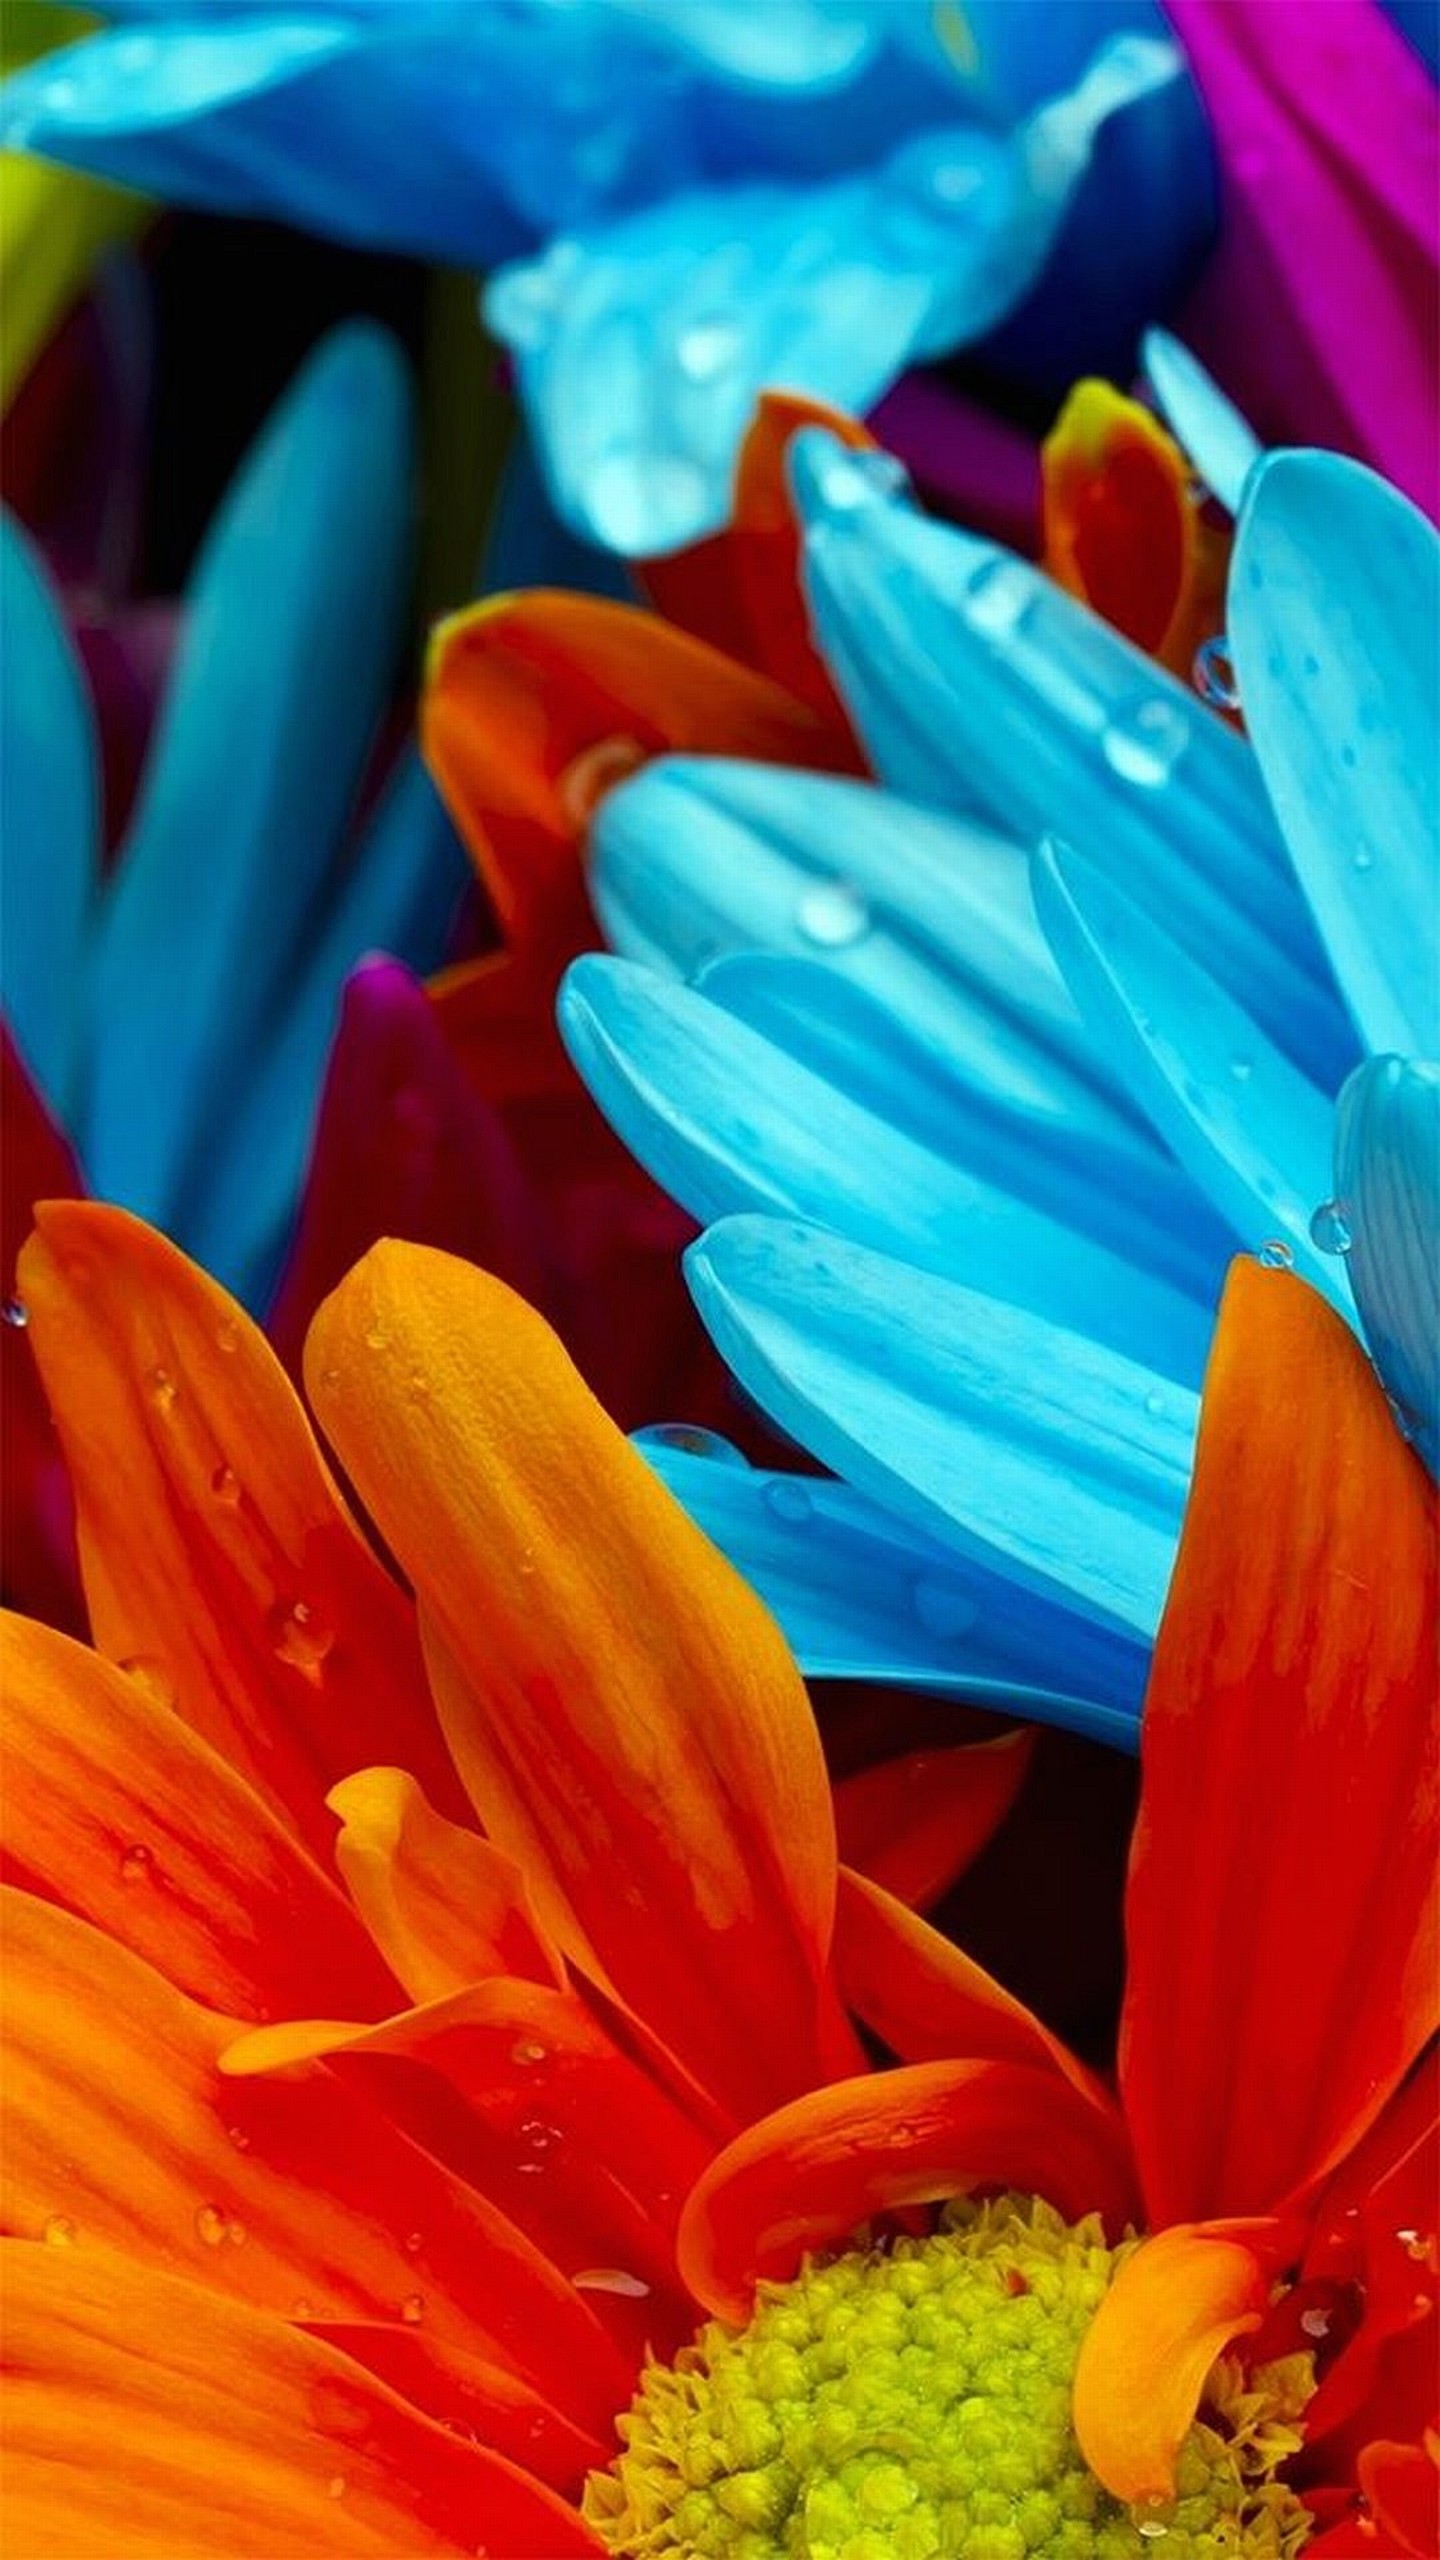 lg g4 fondo de pantalla,pétalo,azul,naranja,flor,de cerca